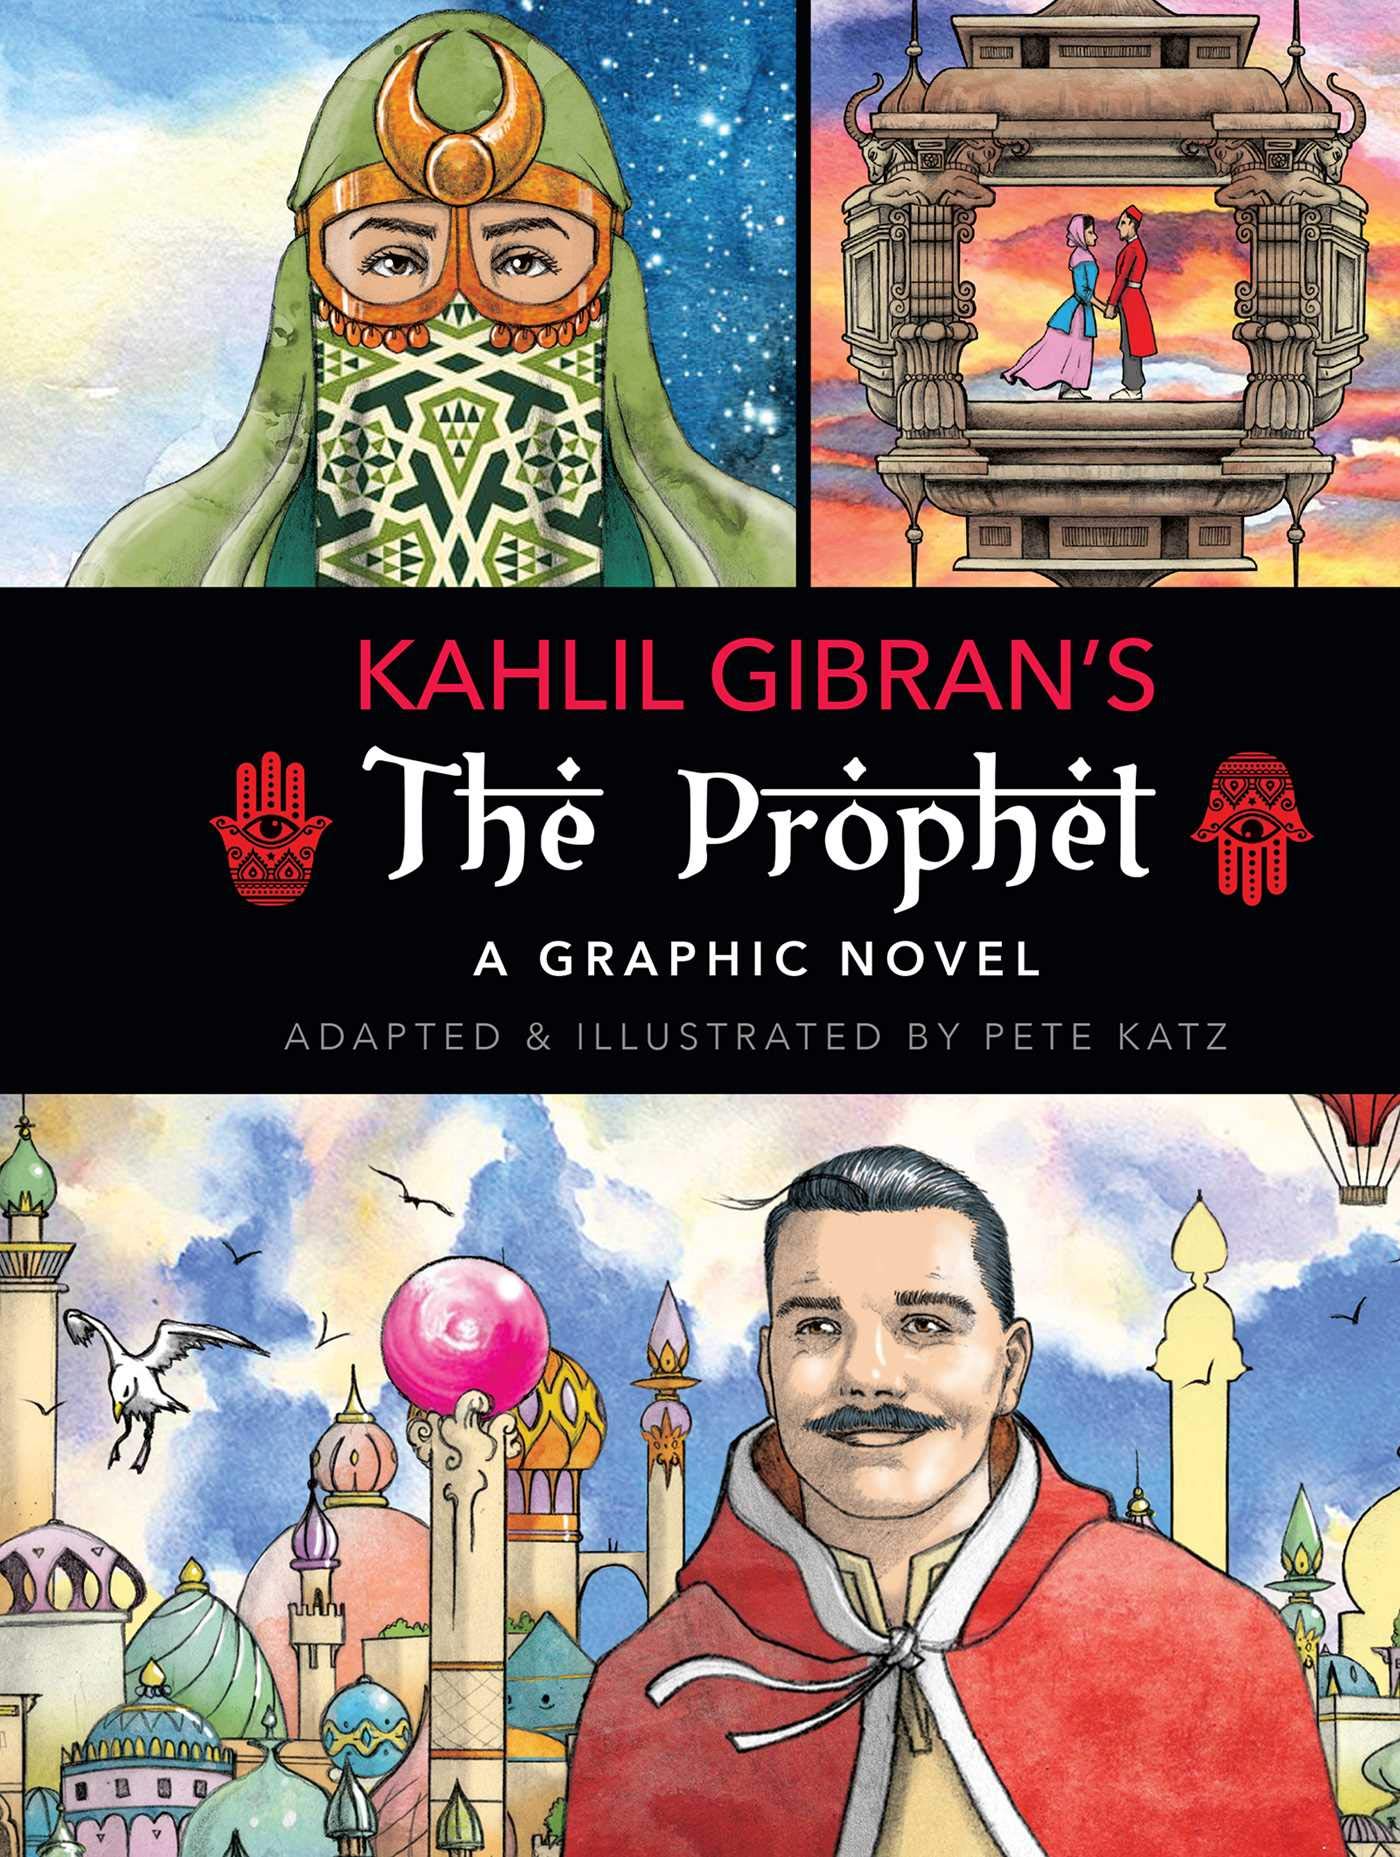 Illustrator Pete Katz adapting The Prophet as a graphic novel